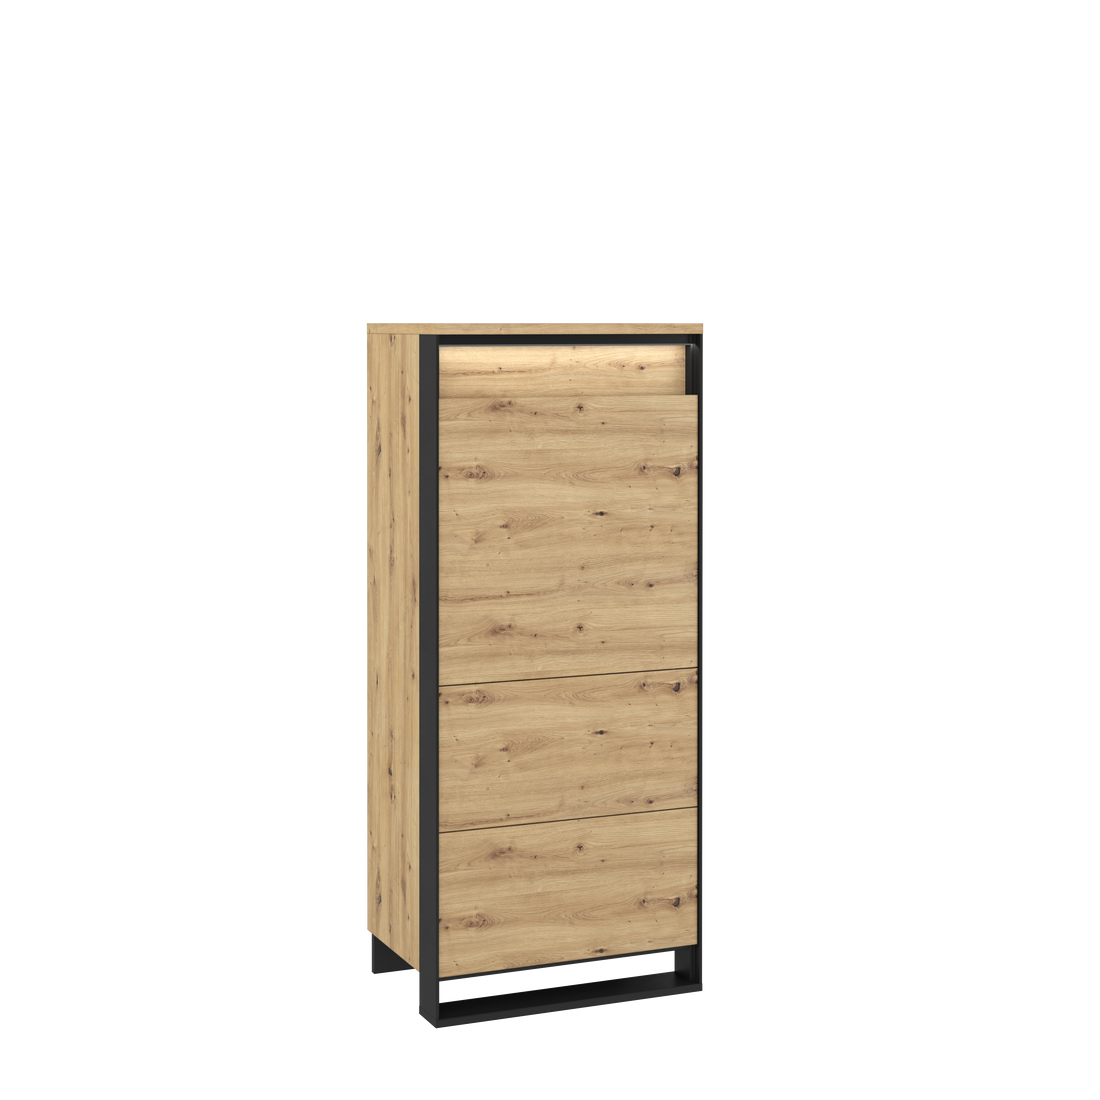 Quant QA-07 1 Door Cabinet - £189.0 - Living Sideboard Cabinet 